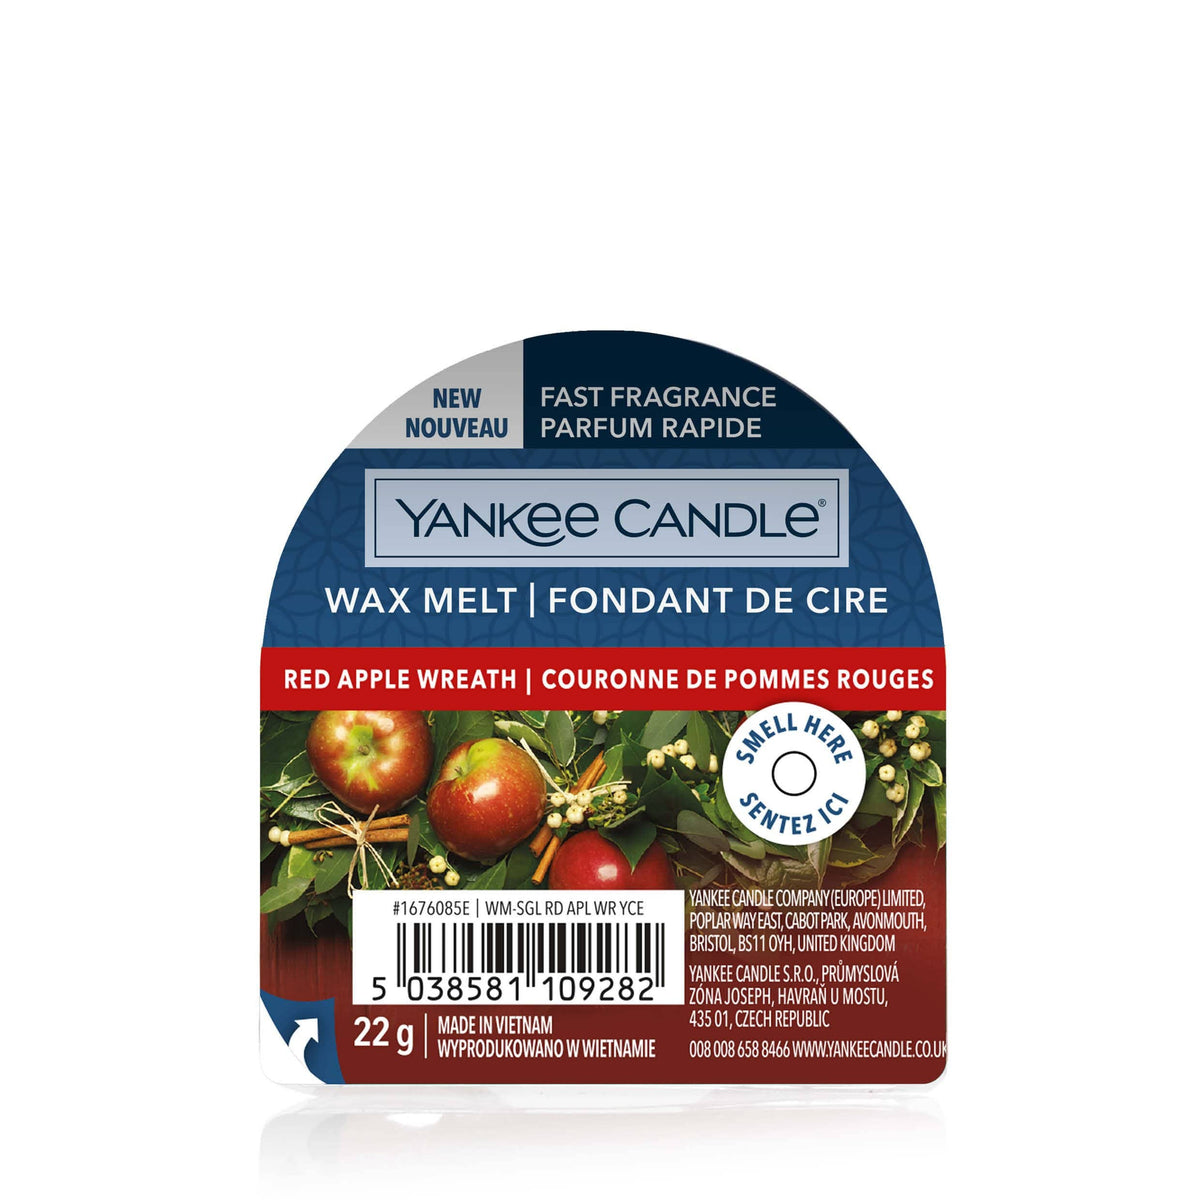 EUR 9,95 pro 100g Yankee Candle wax melt tart Duftwachs Red Apple Wreath 